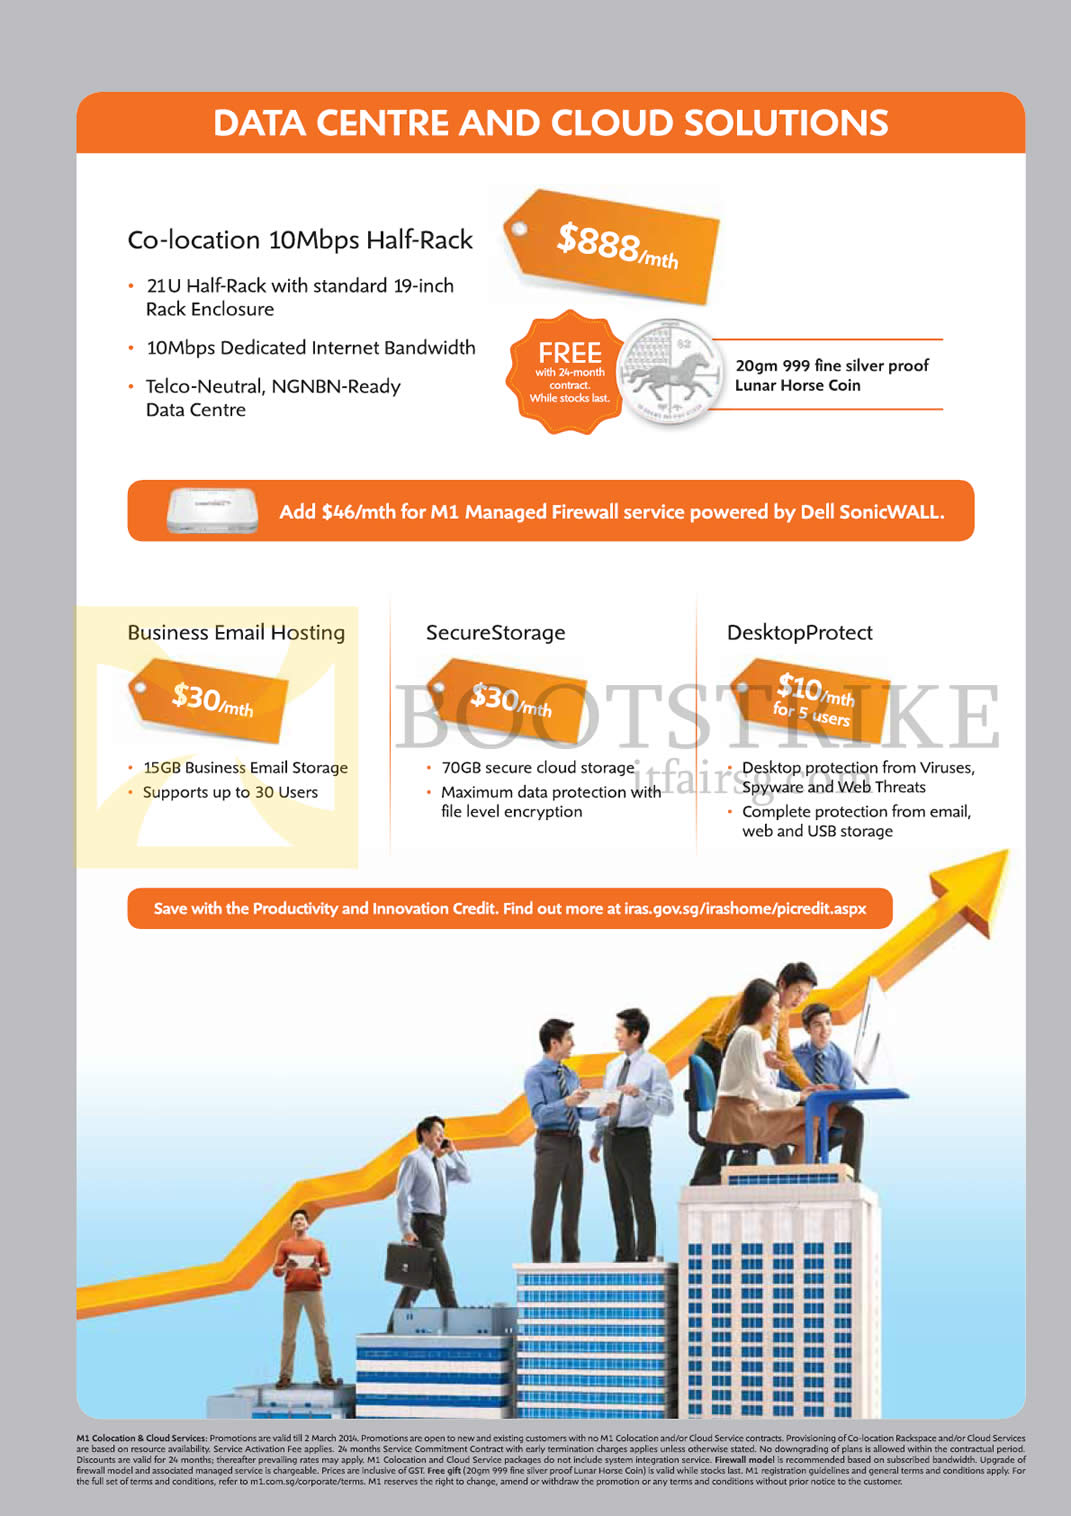 IT SHOW 2014 price list image brochure of M1 Business Data Centre Co-Location, Cloud, Email Hosting, SecureStorage, DesktopProject